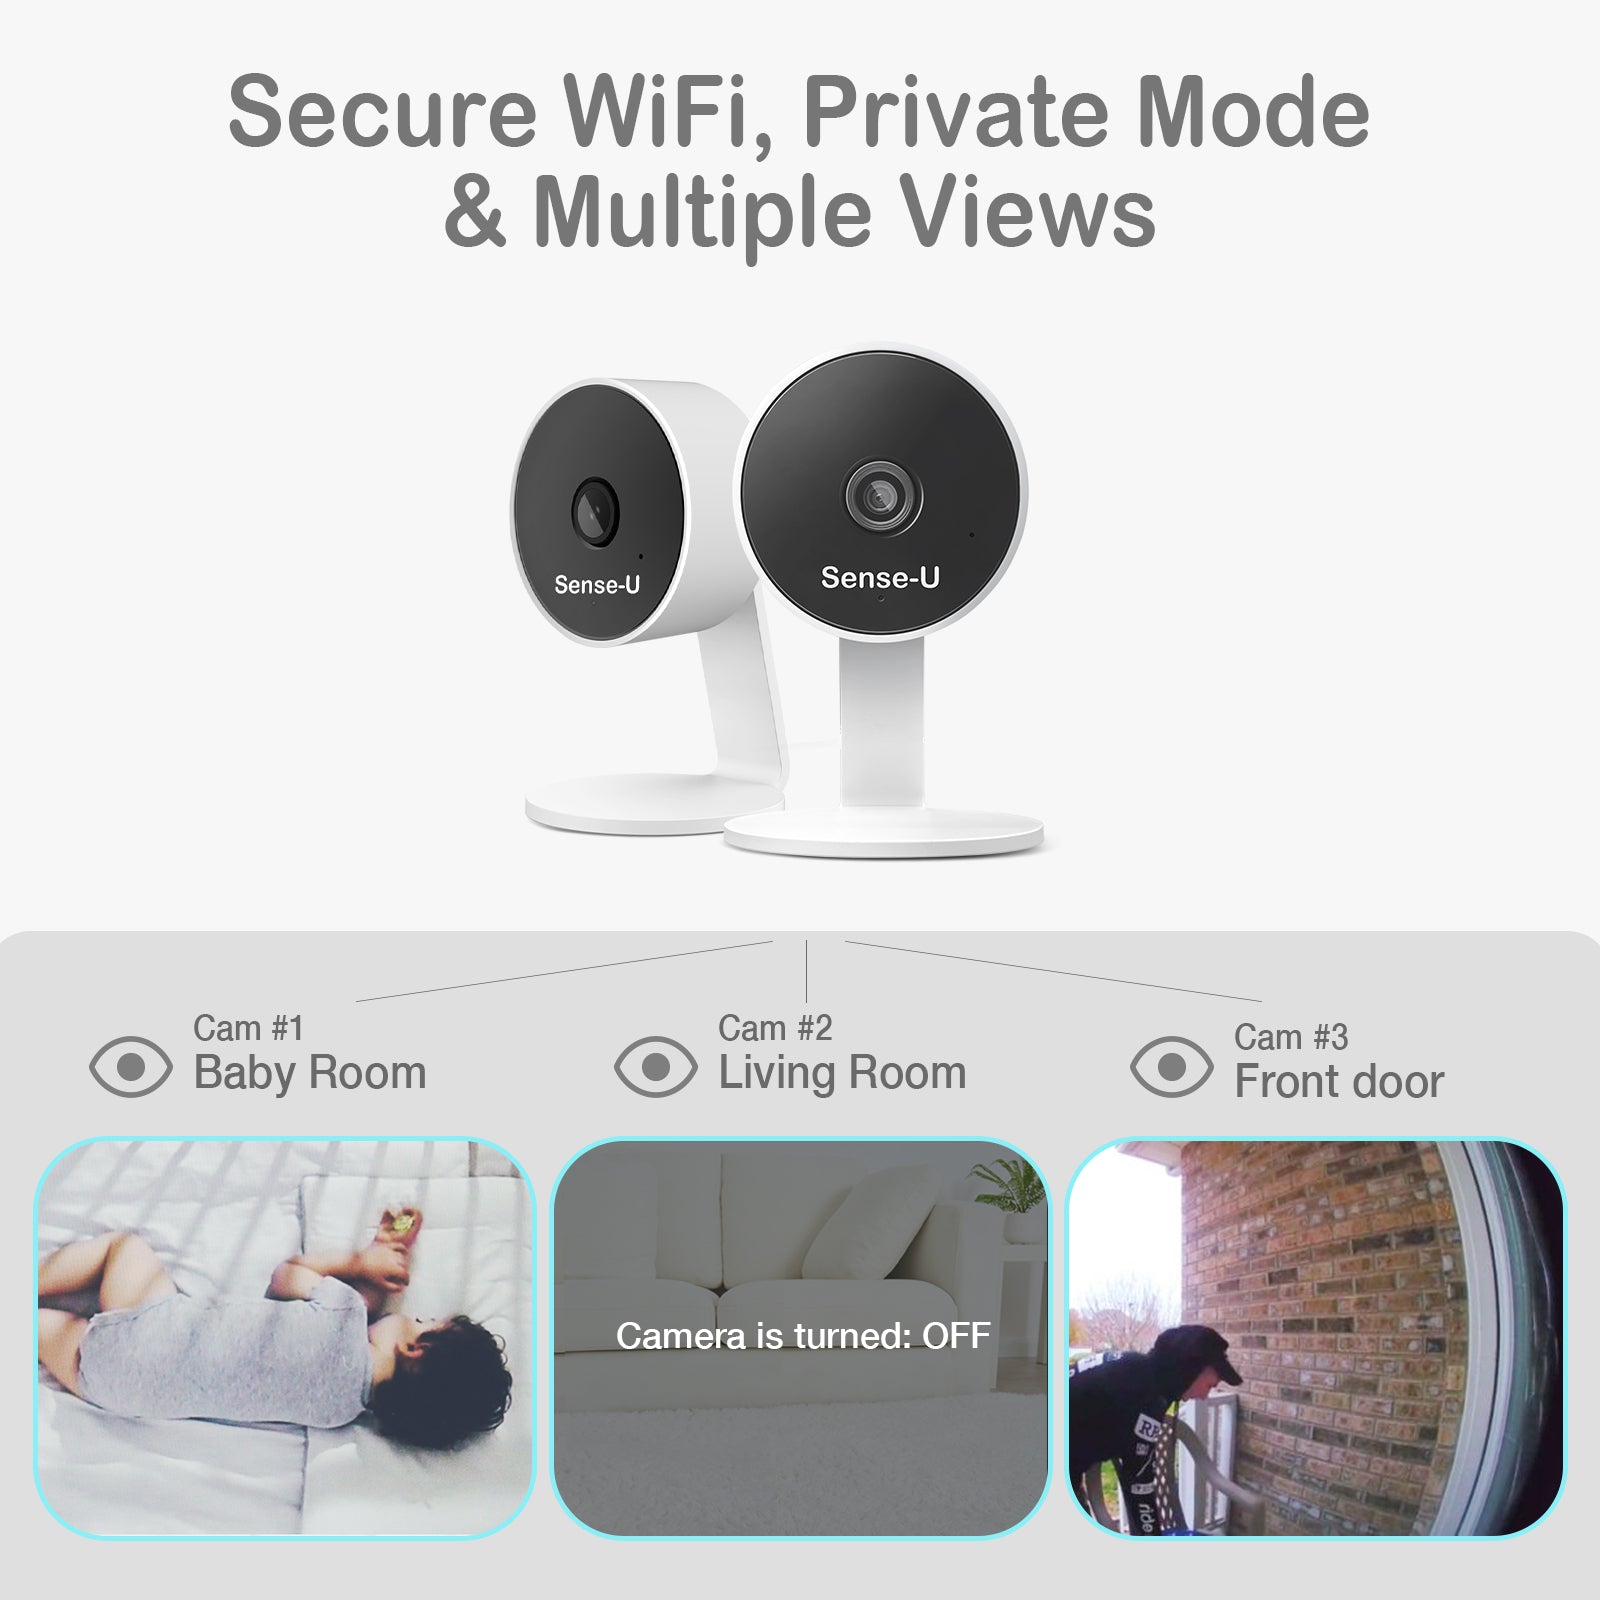 Sense-U Video Camera 2: 1080P HD, 2-Way Talk, Night Vision,Secure WiFi